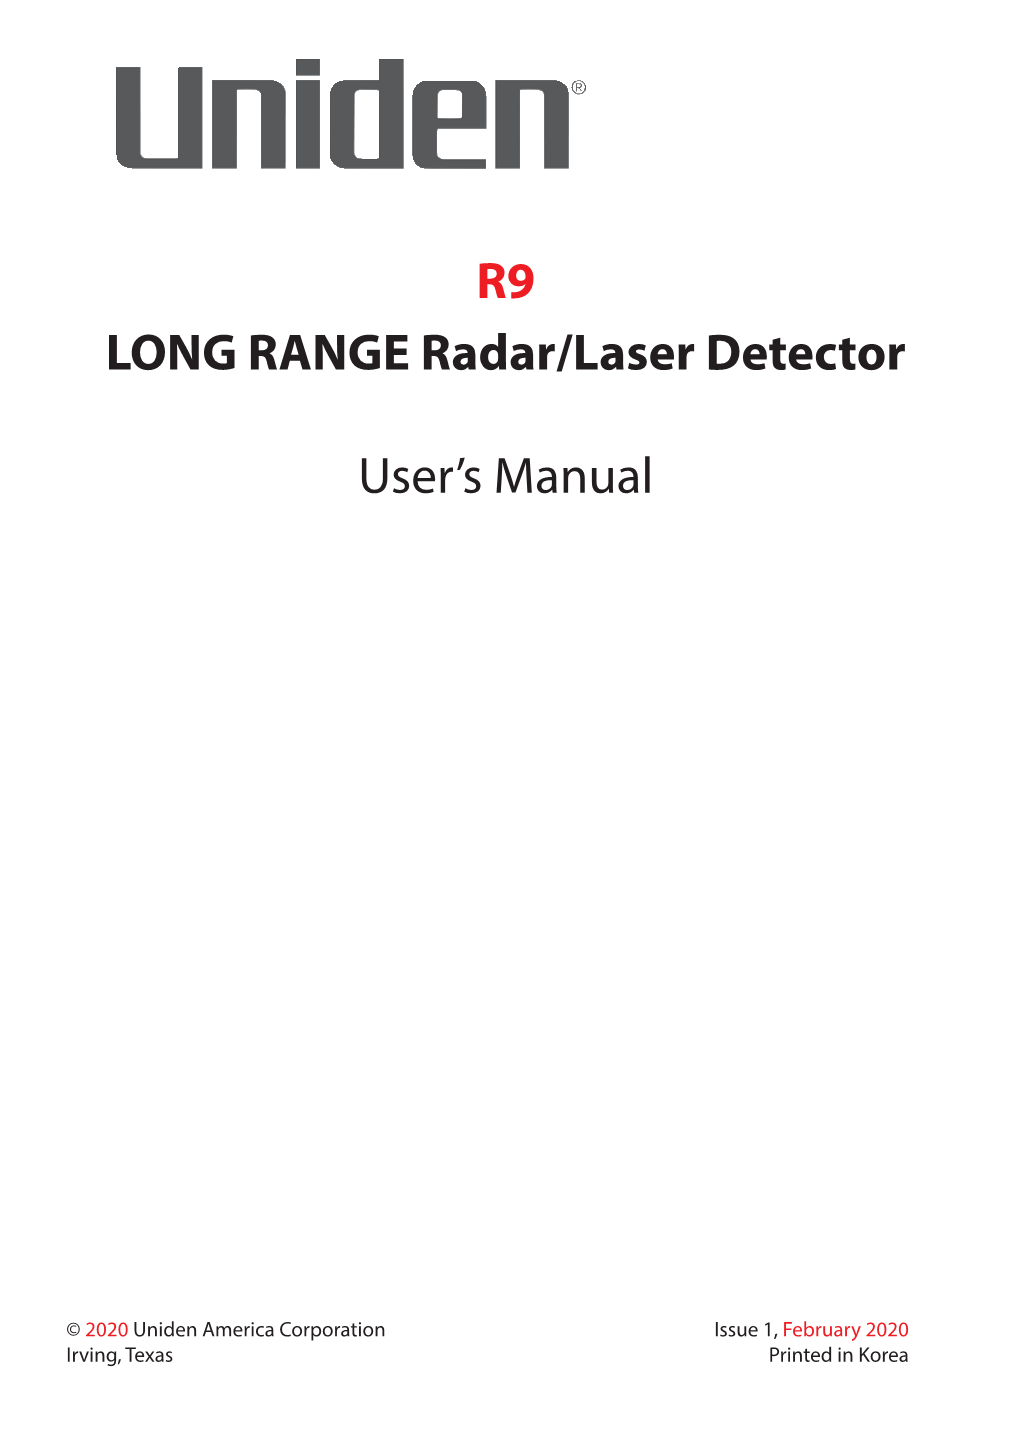 LONG RANGE Radar/Laser Detector User's Manual R9